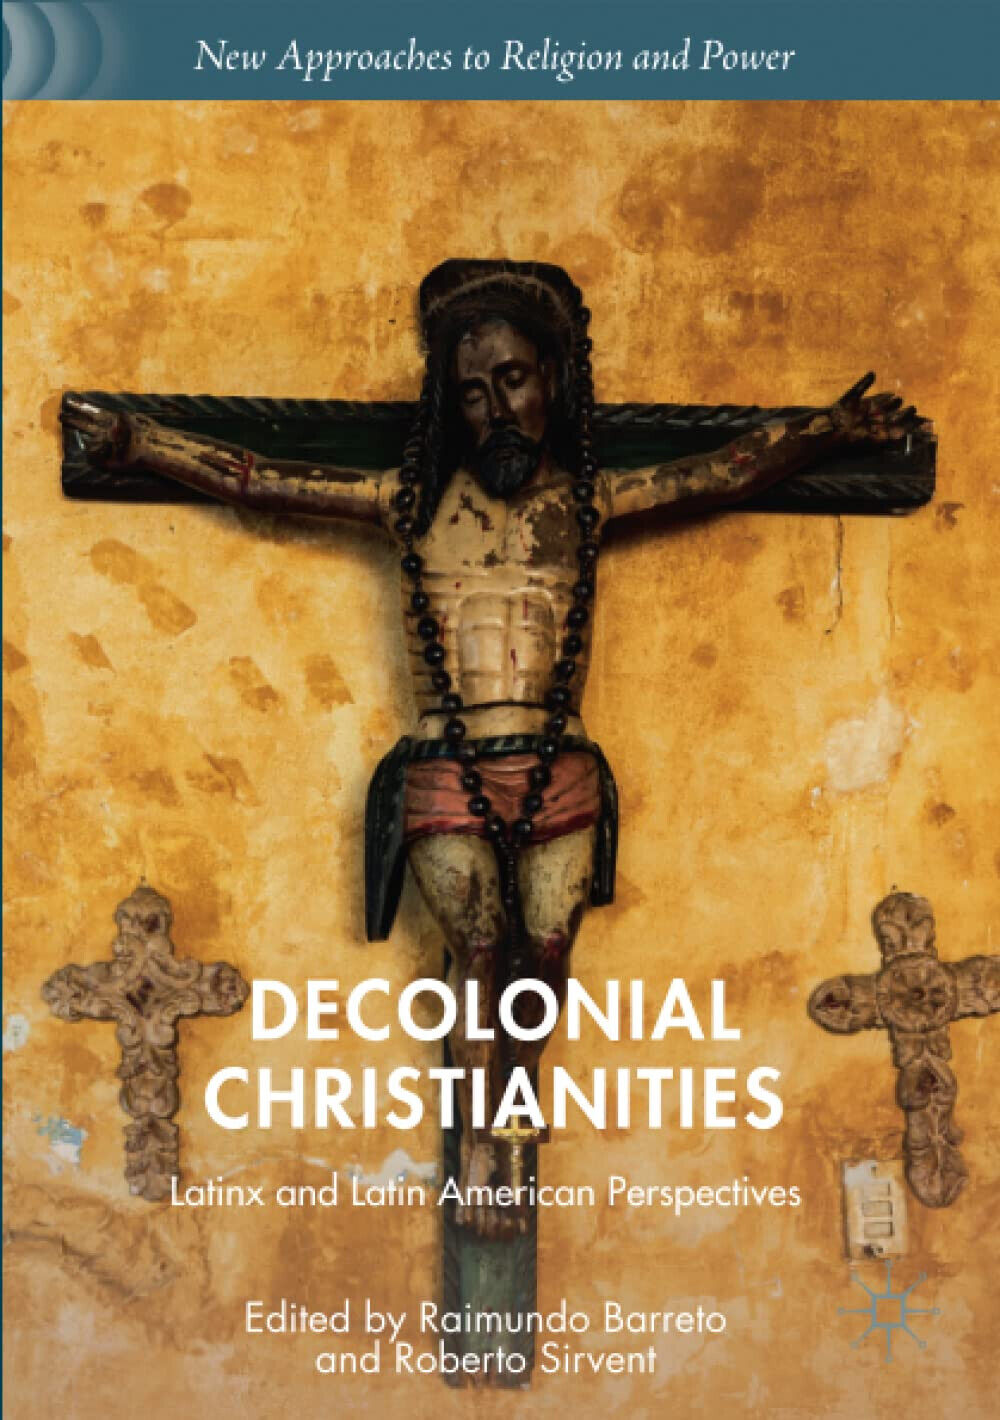 Decolonial Christianities - Raimundo Barreto - Palgrave, 2020